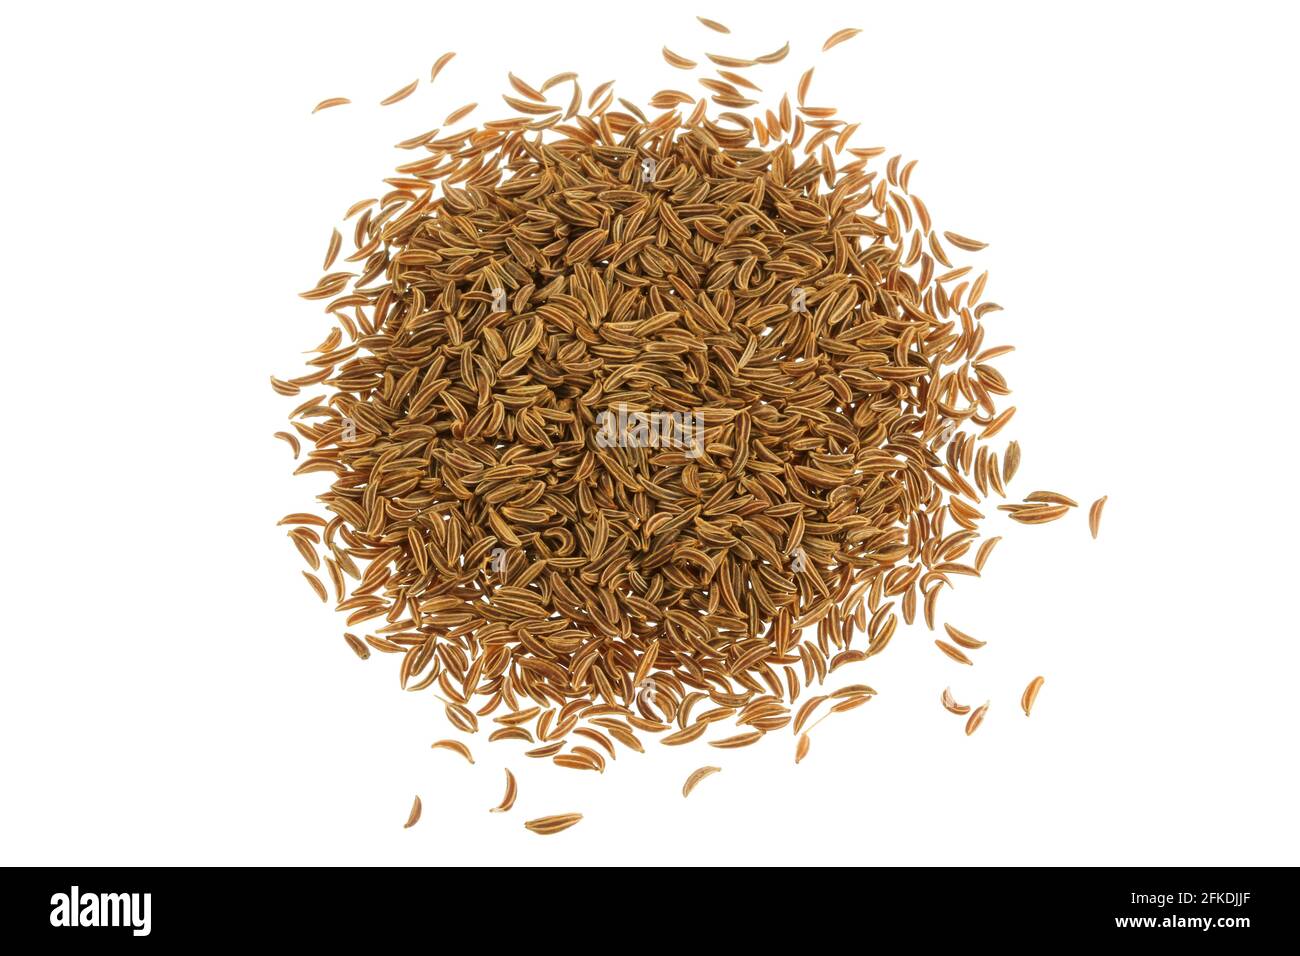 Closeup photo of dried aromatic herb Caraway seeds Stock Photo